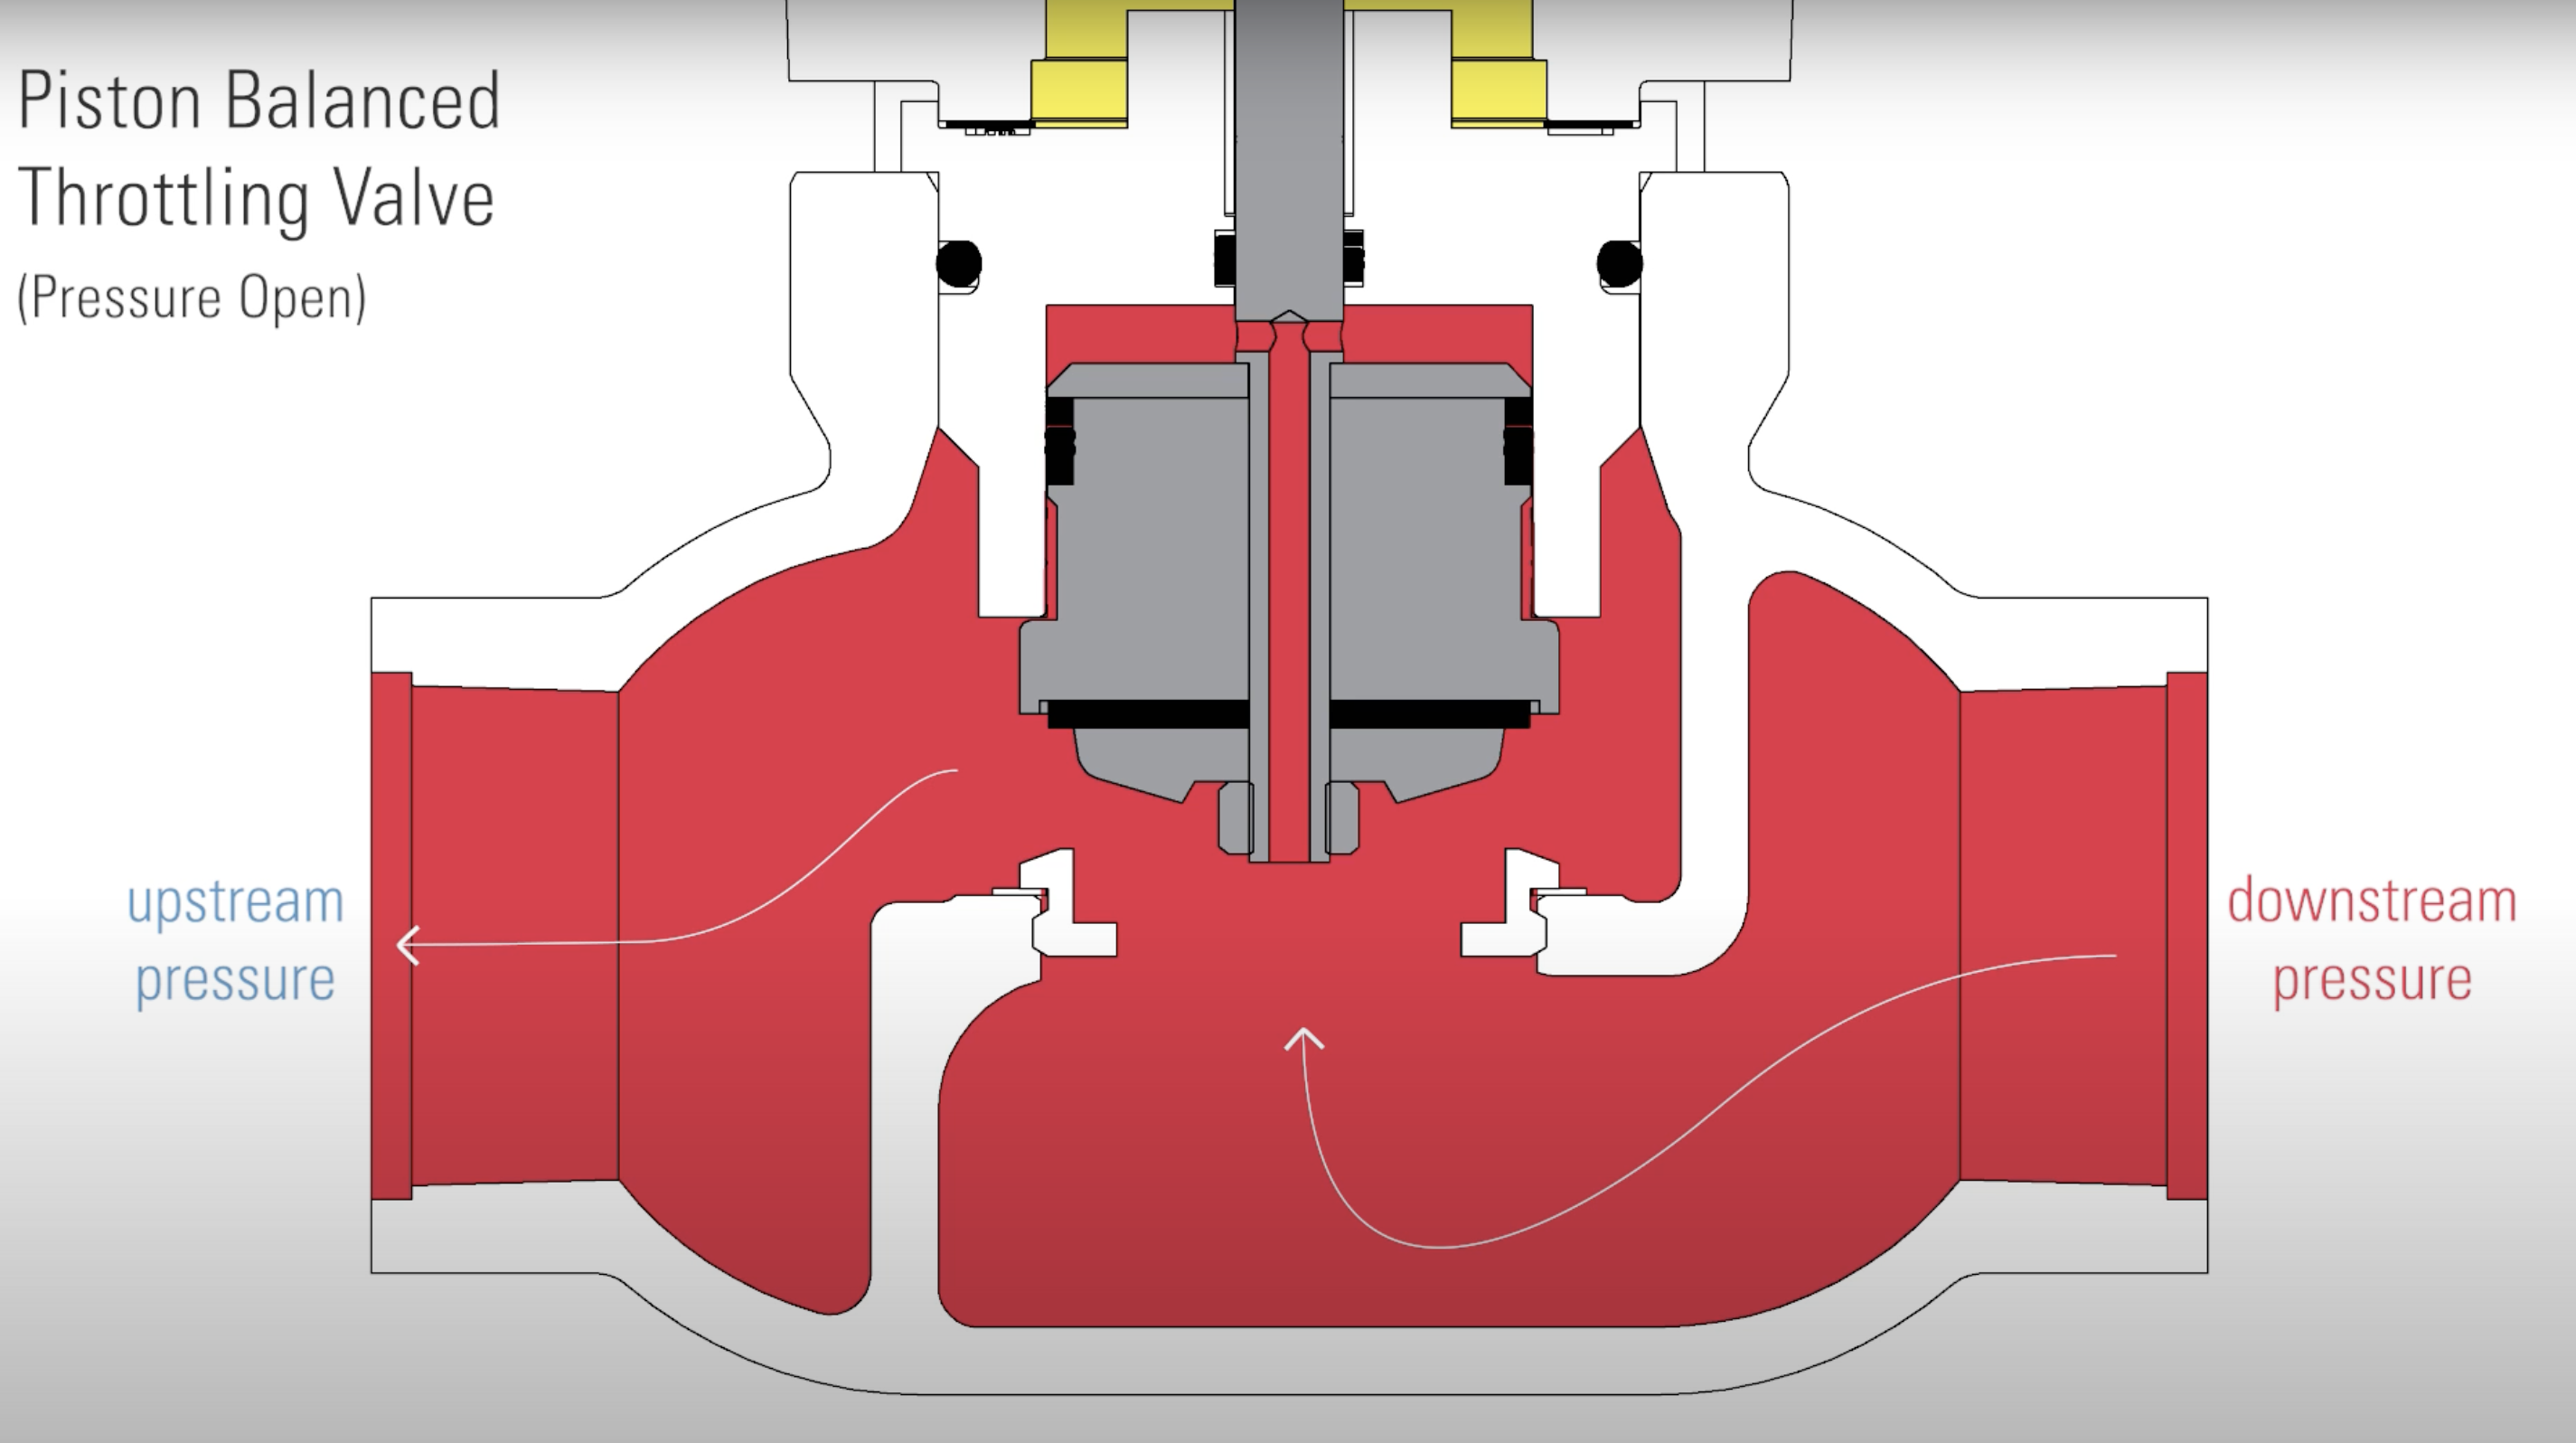 Piston Balanced Throttling Valve Rendering Showing Pressure Flow Path